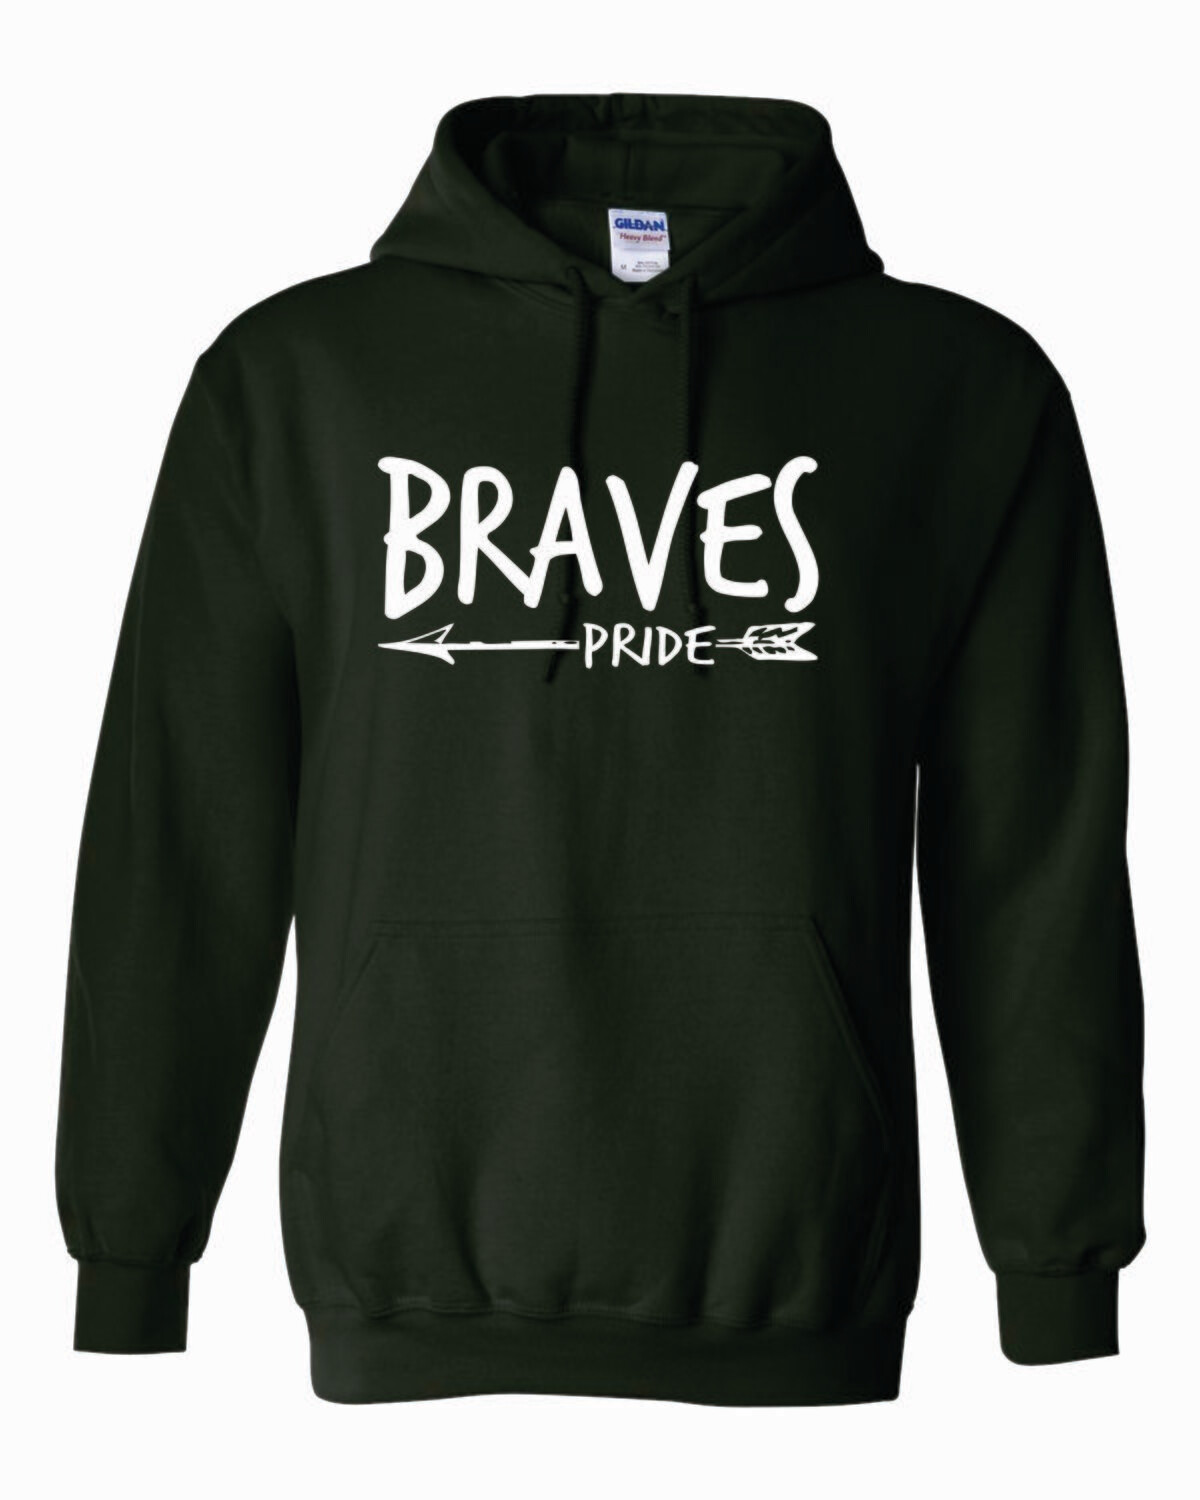 BRAVES PRIDE Hooded Sweatshirt, 5 colors available